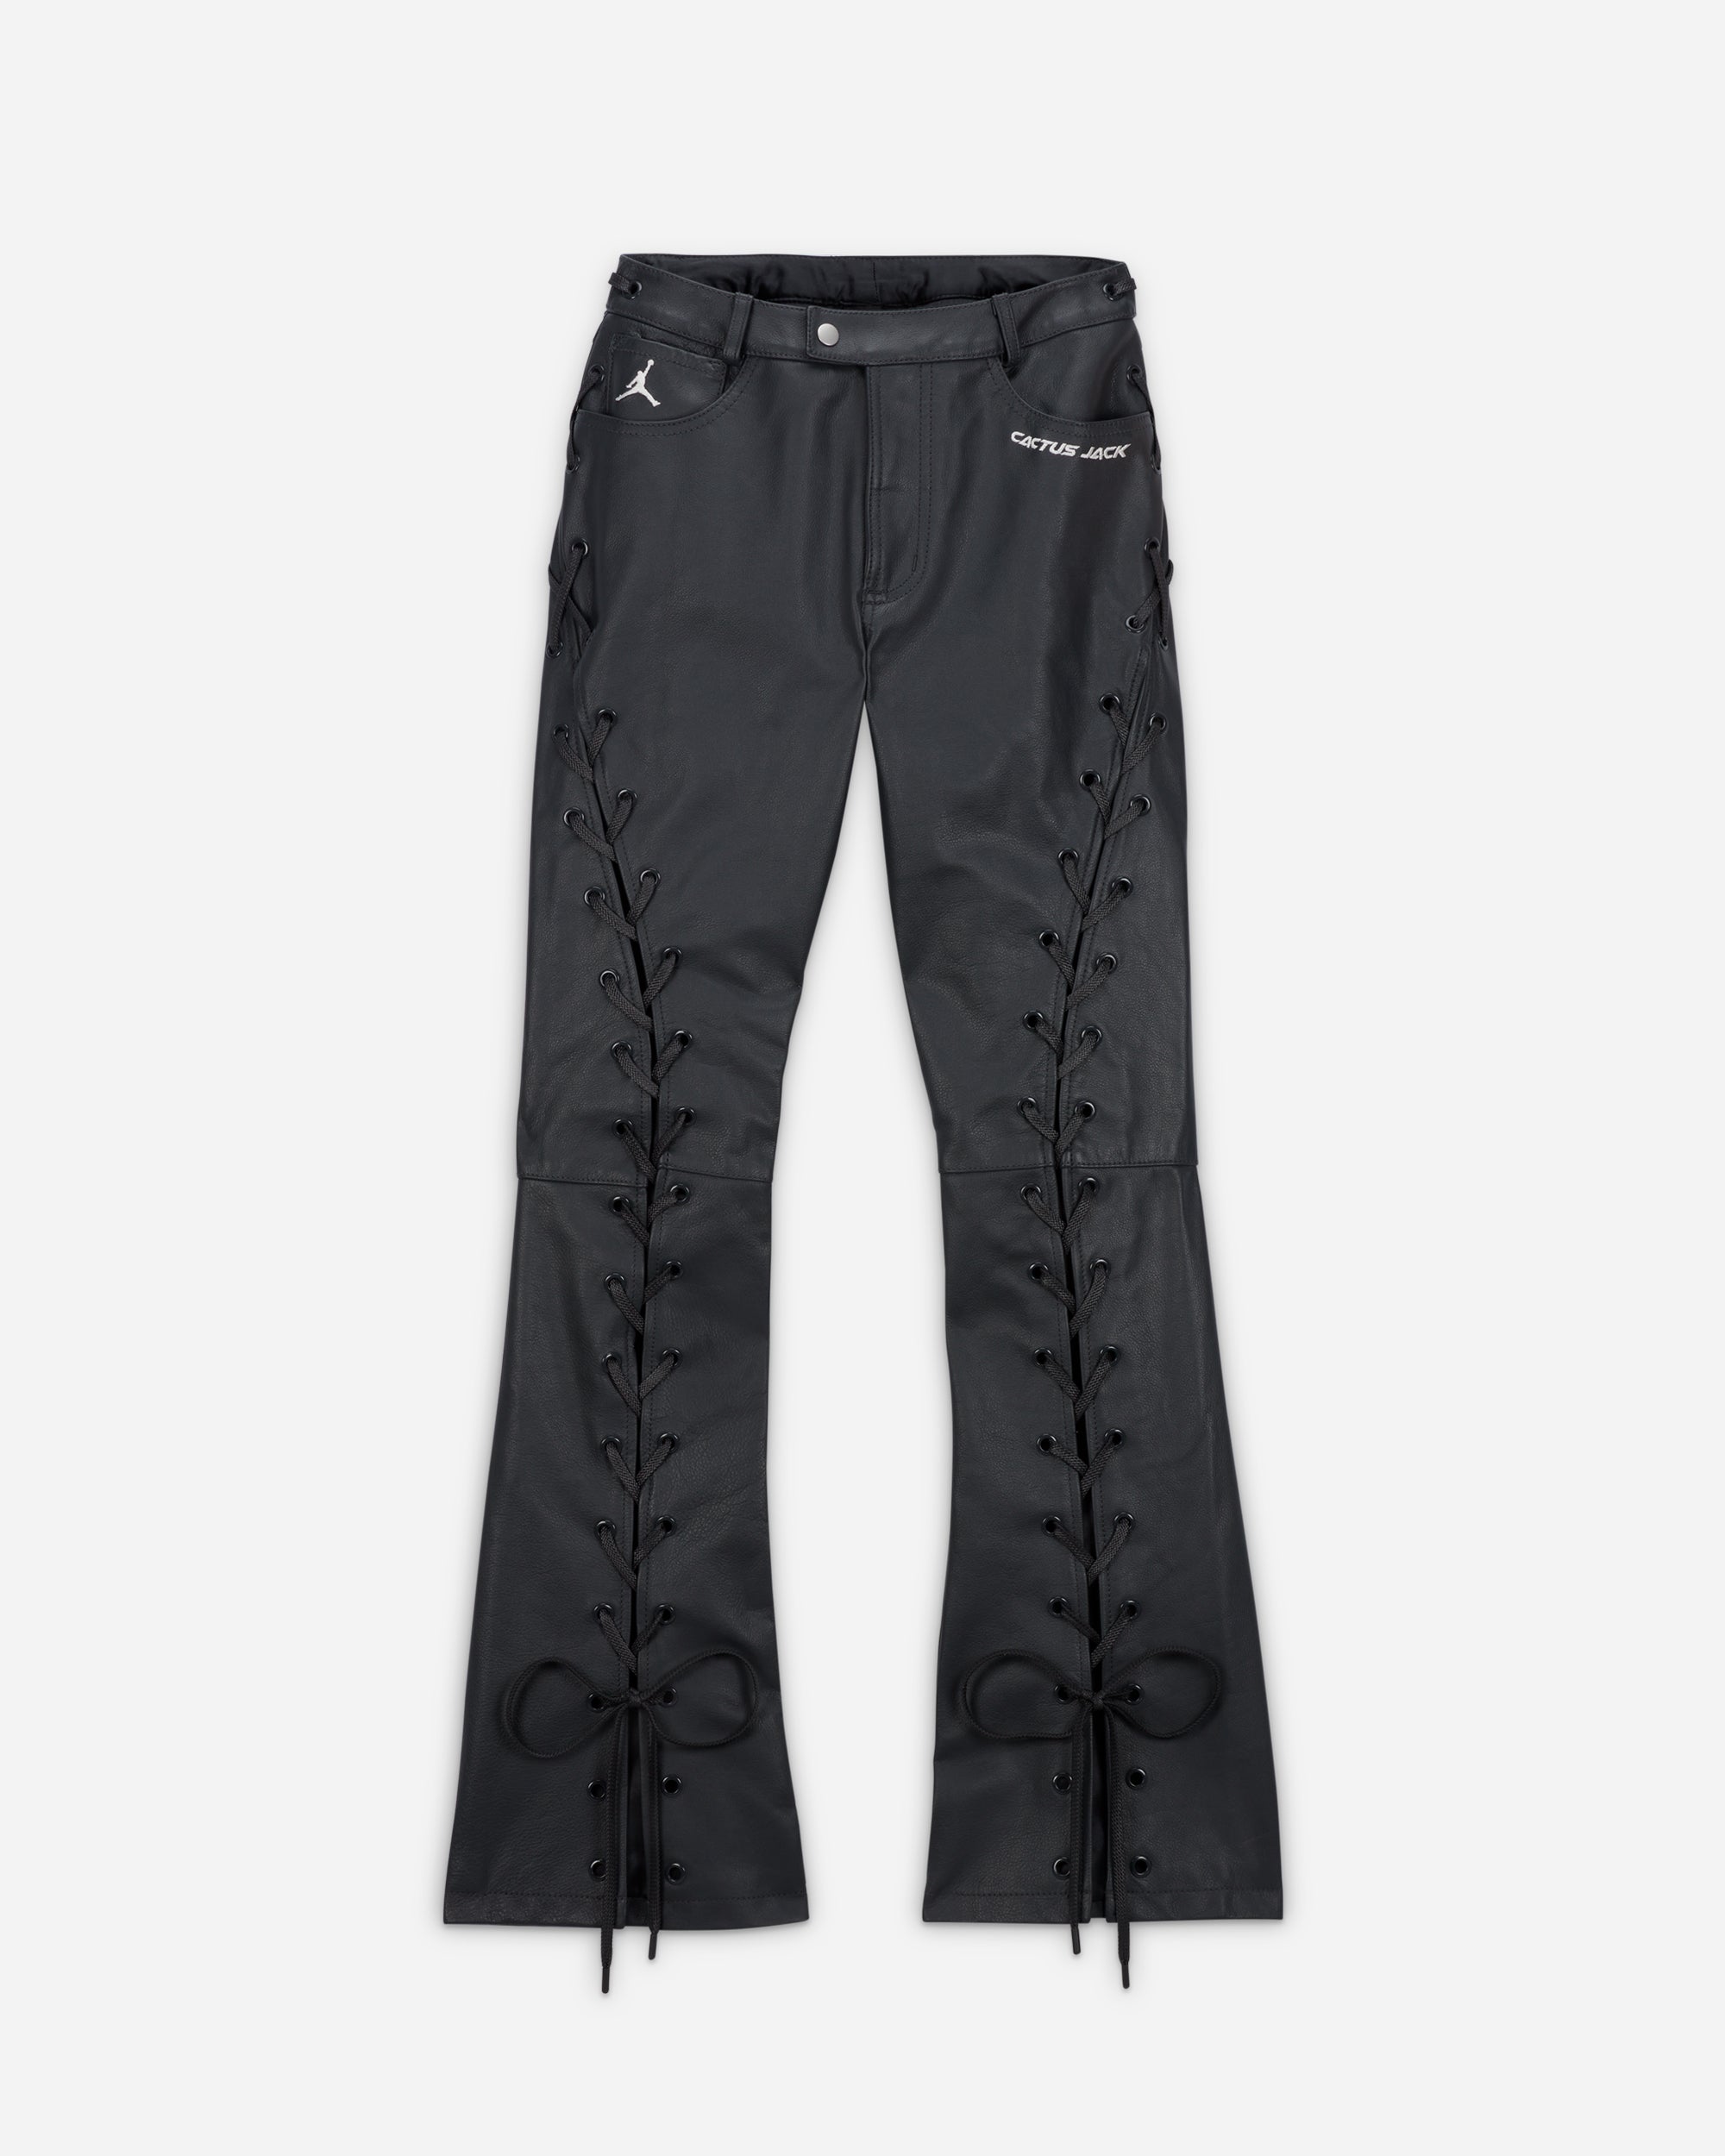 Jordan Brand Jordan Brand x Travis Scott Lace Pants Dark Smoke Grey DX6170-070